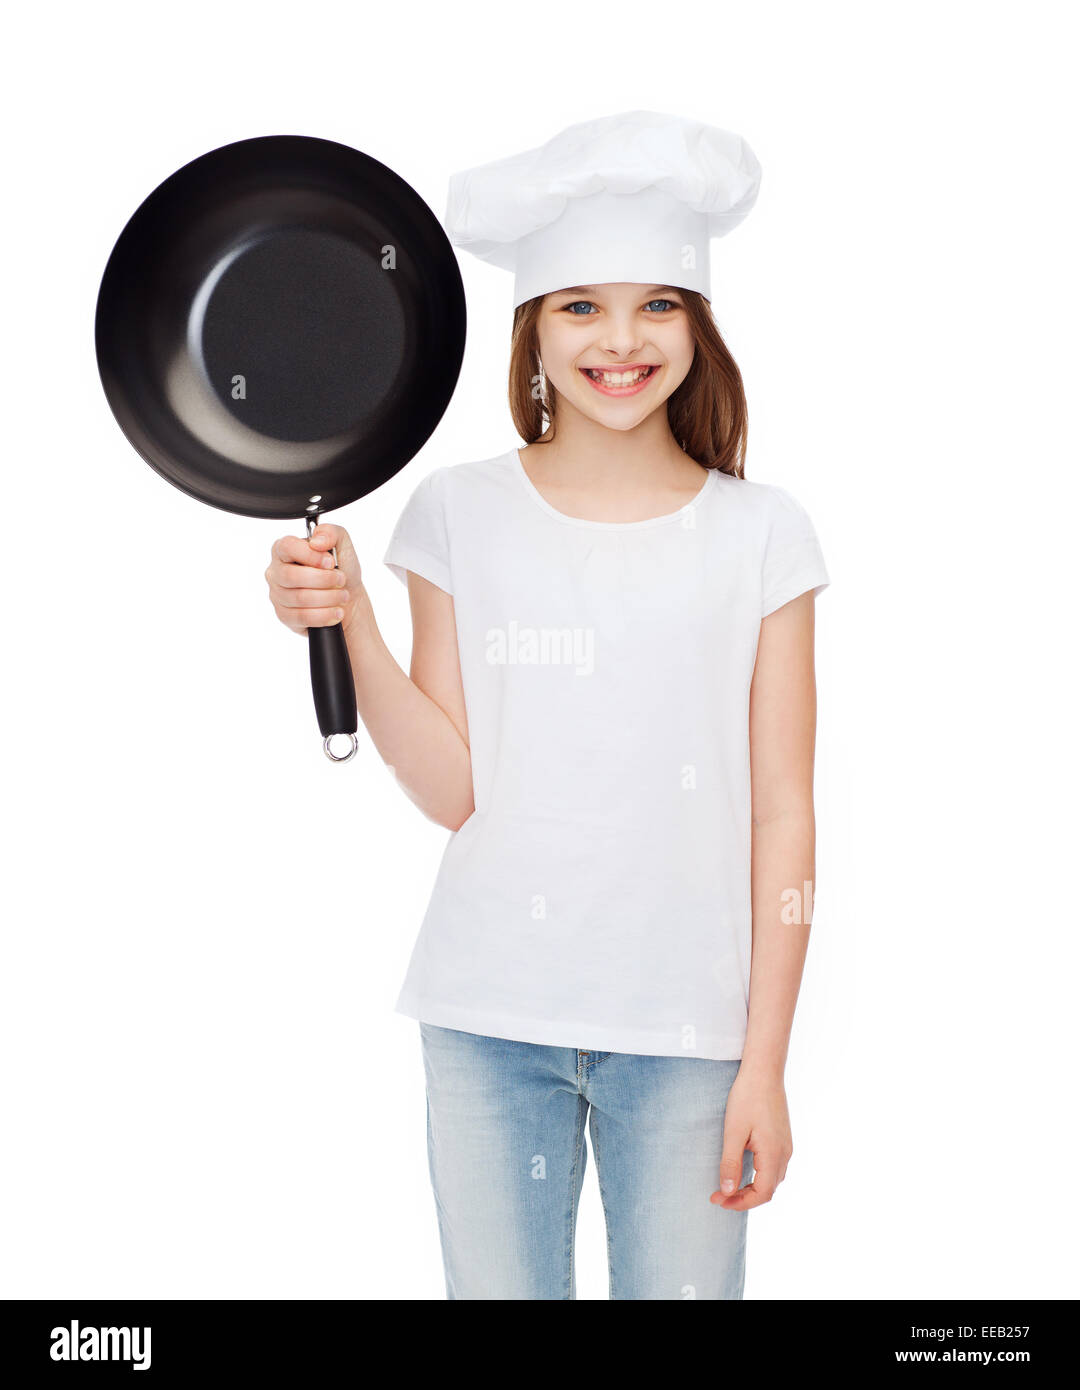 Smiling girl in cook hat avec poêle Banque D'Images